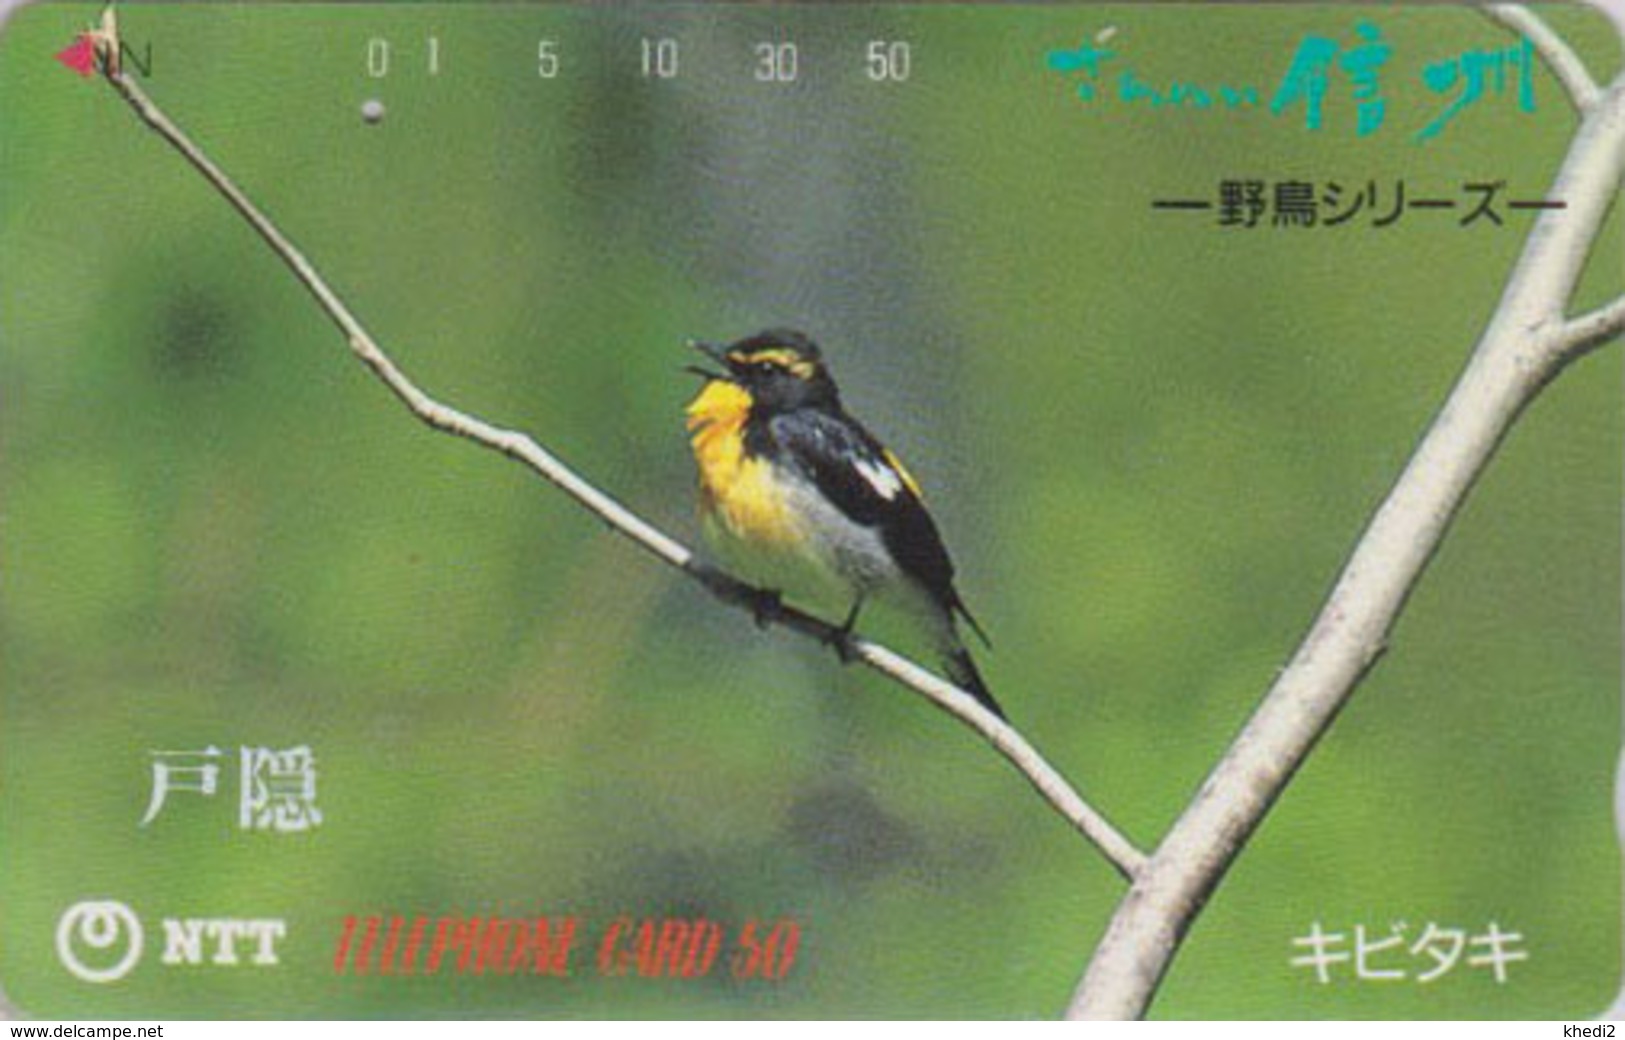 Télécarte Japon / NTT 270-164 A ** ONE PUNCH ** - Animal - OISEAU BRUANT - BIRD Japan Phonecard - Songbirds & Tree Dwellers